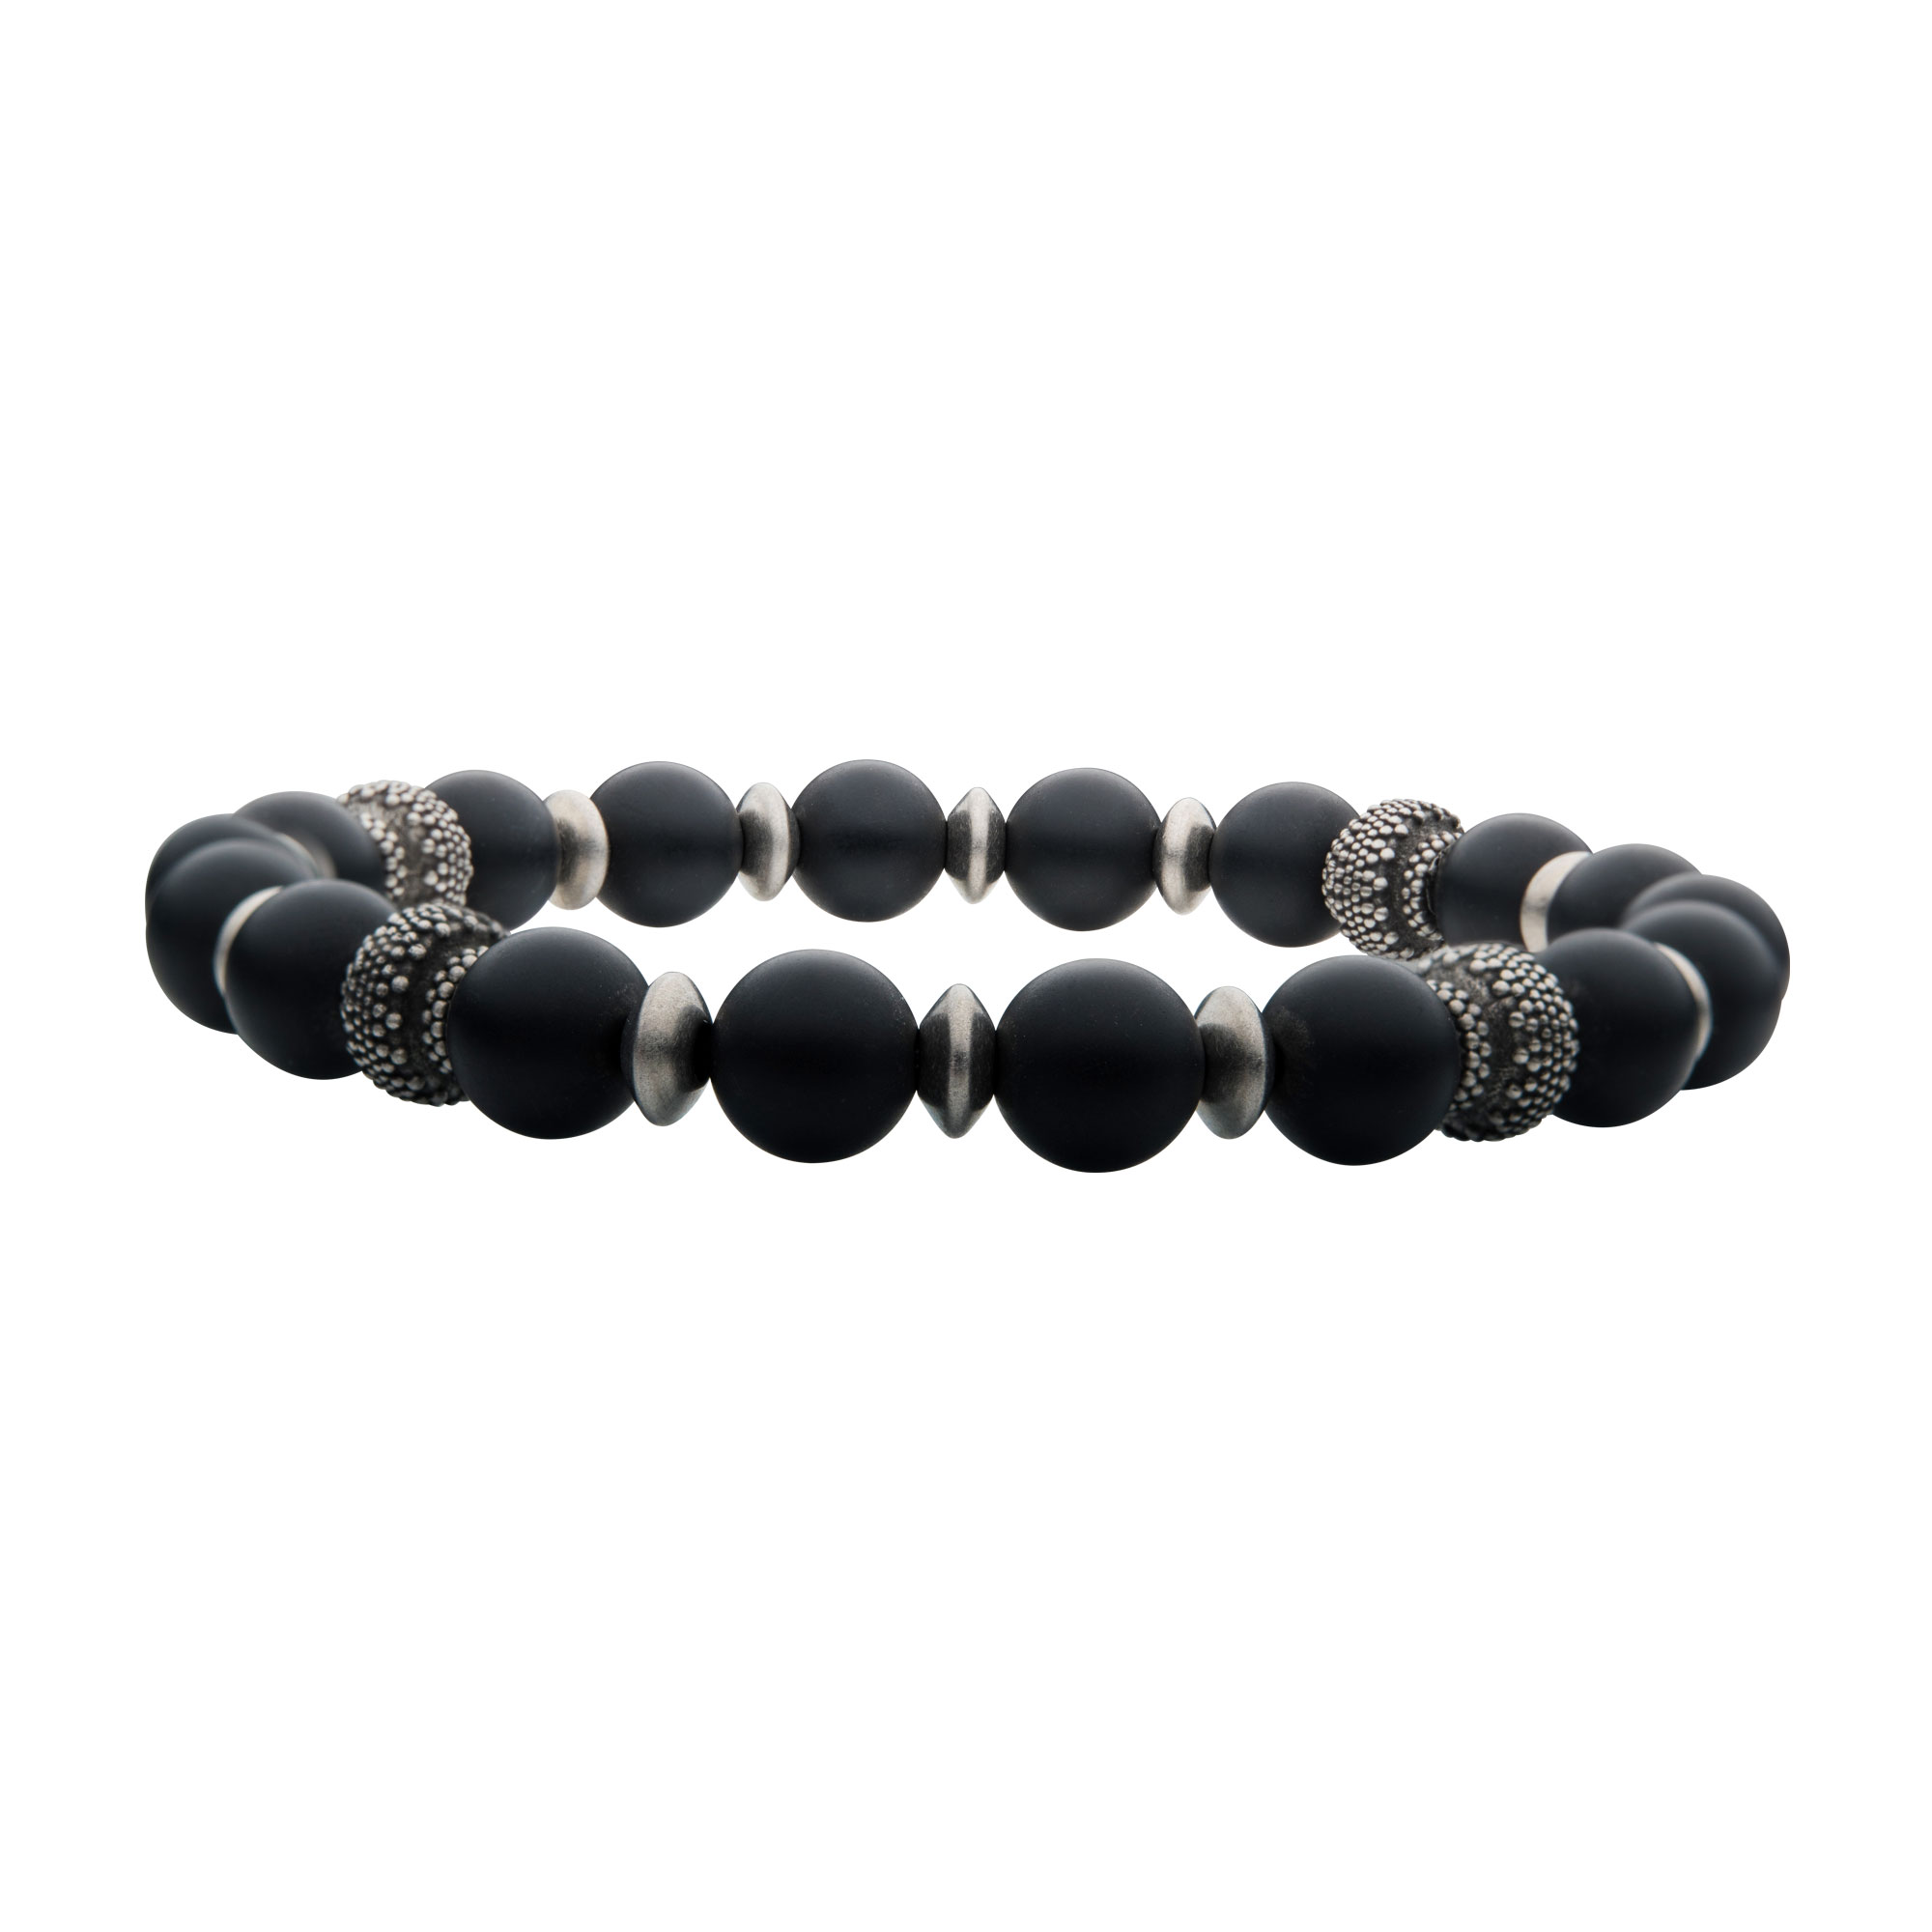 Matte Black Agate Stones with Black Oxidized Beads Bracelet Jayson Jewelers Cape Girardeau, MO